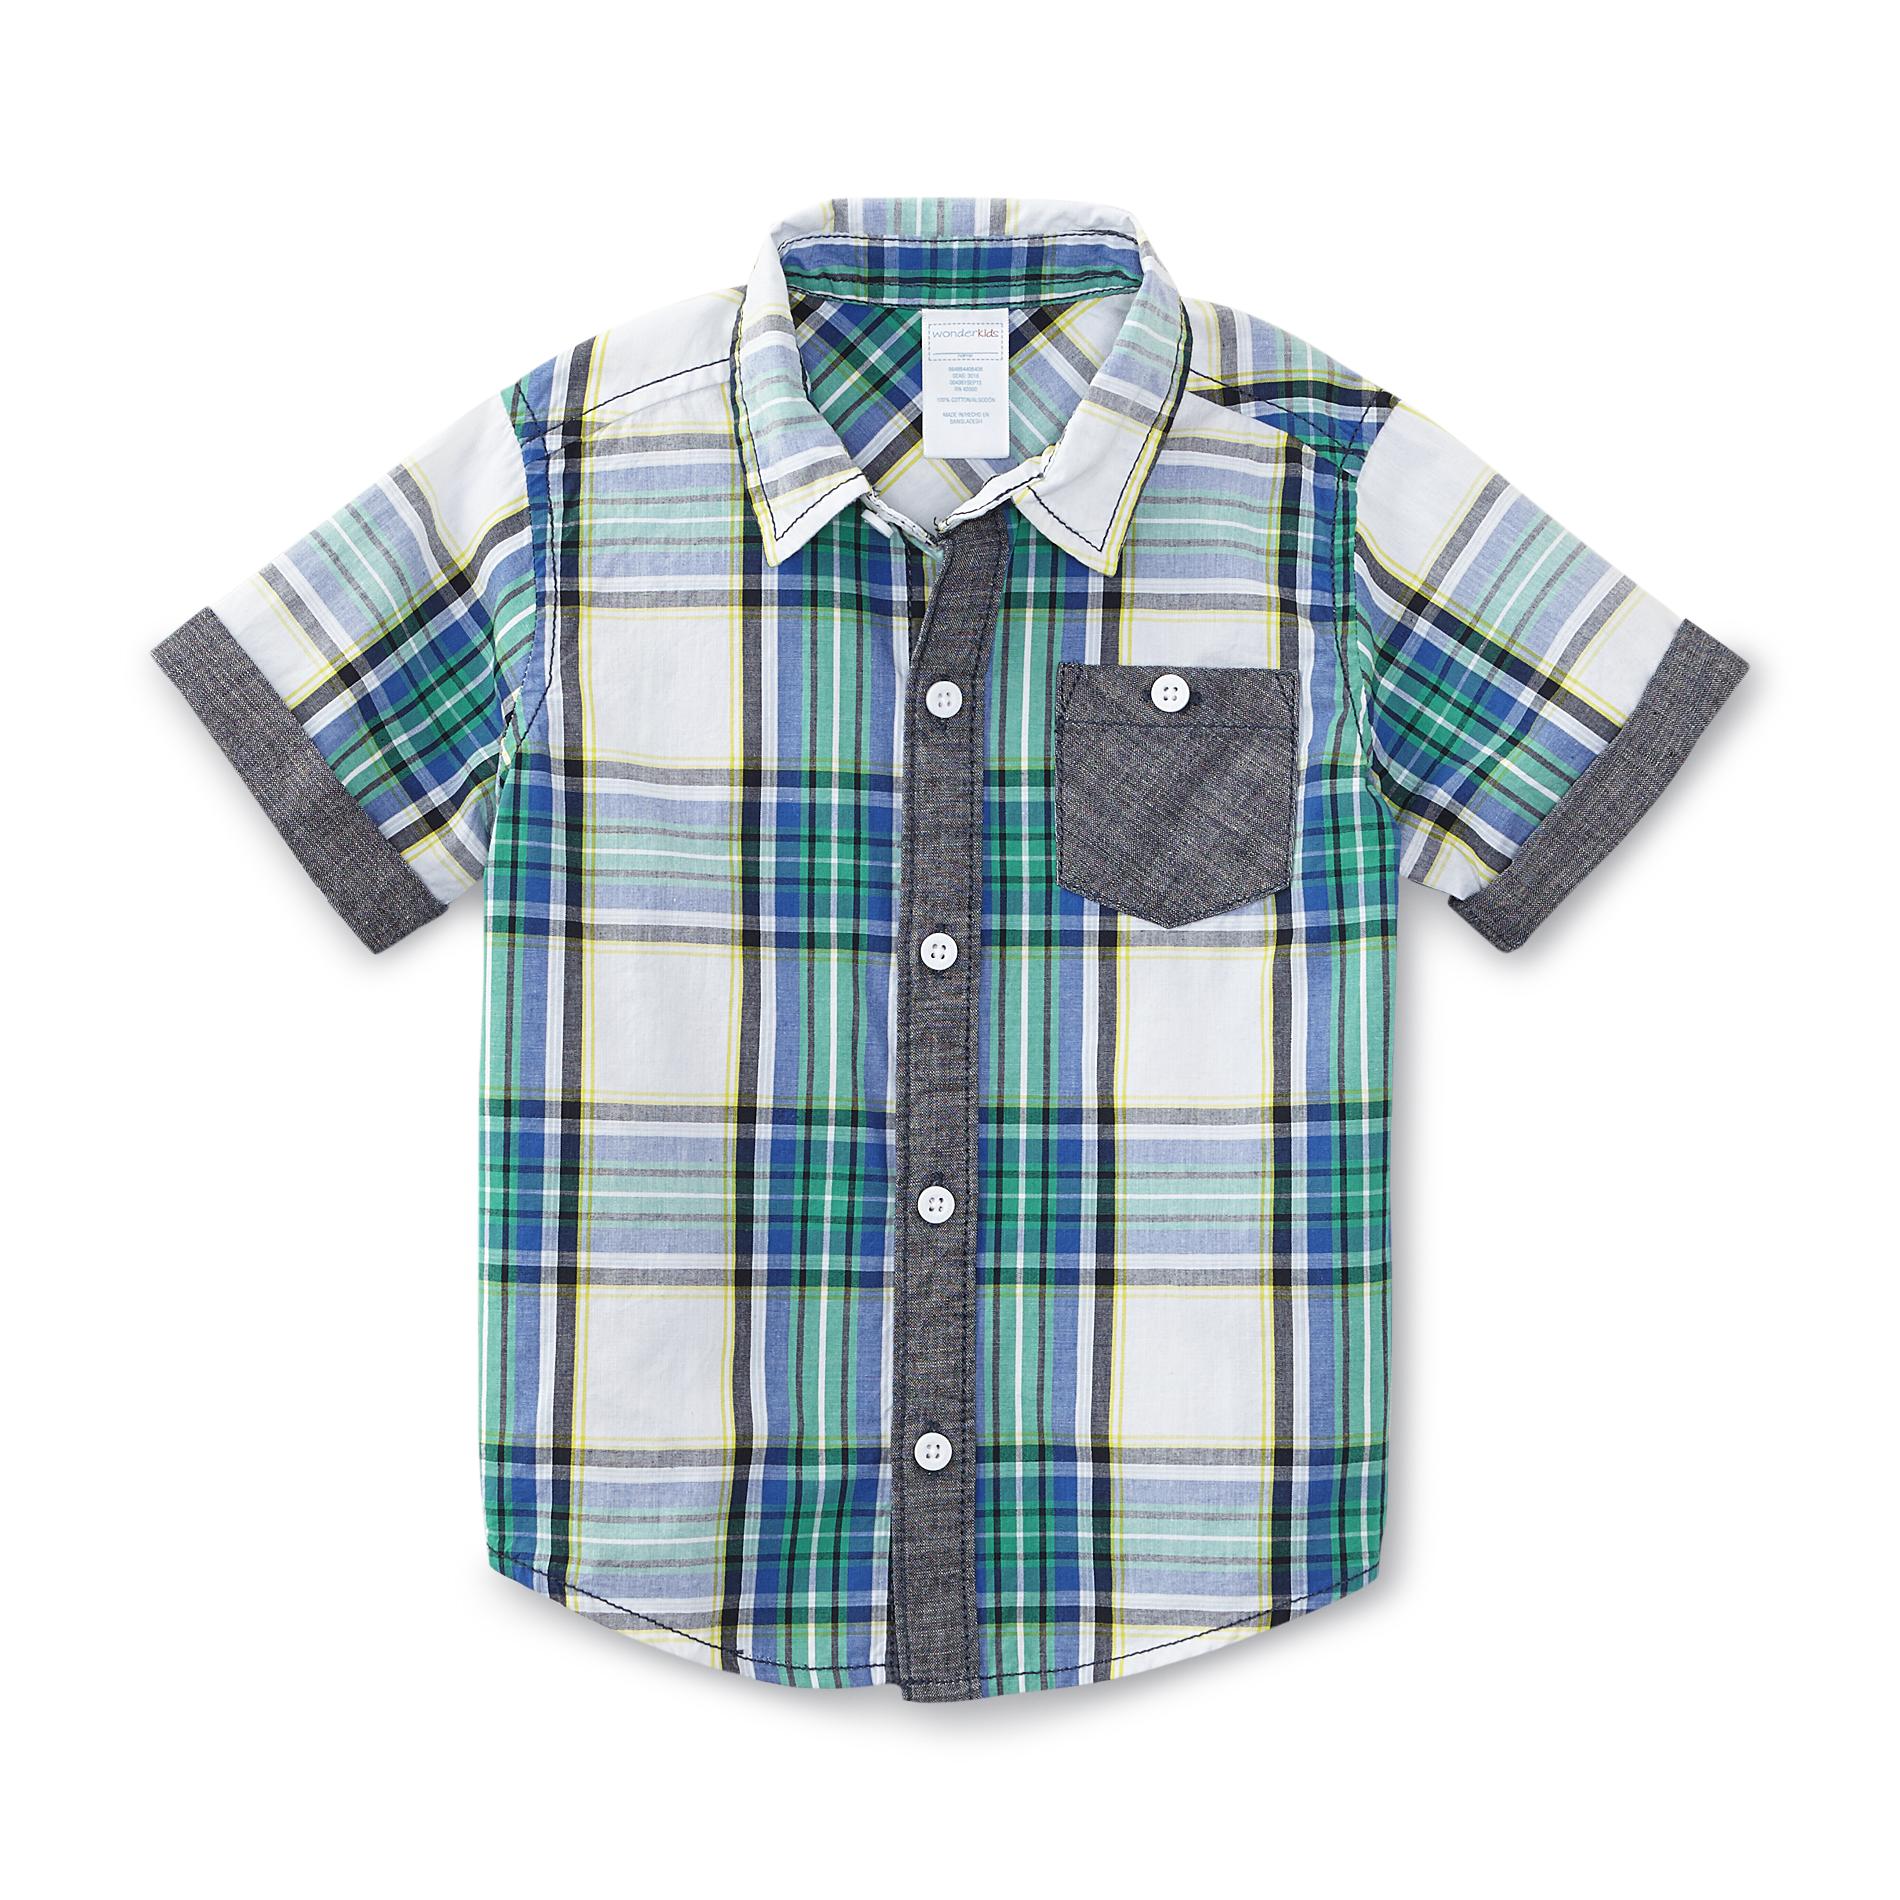 Infant & Toddler Boy's Poplin Shirt - Plaid